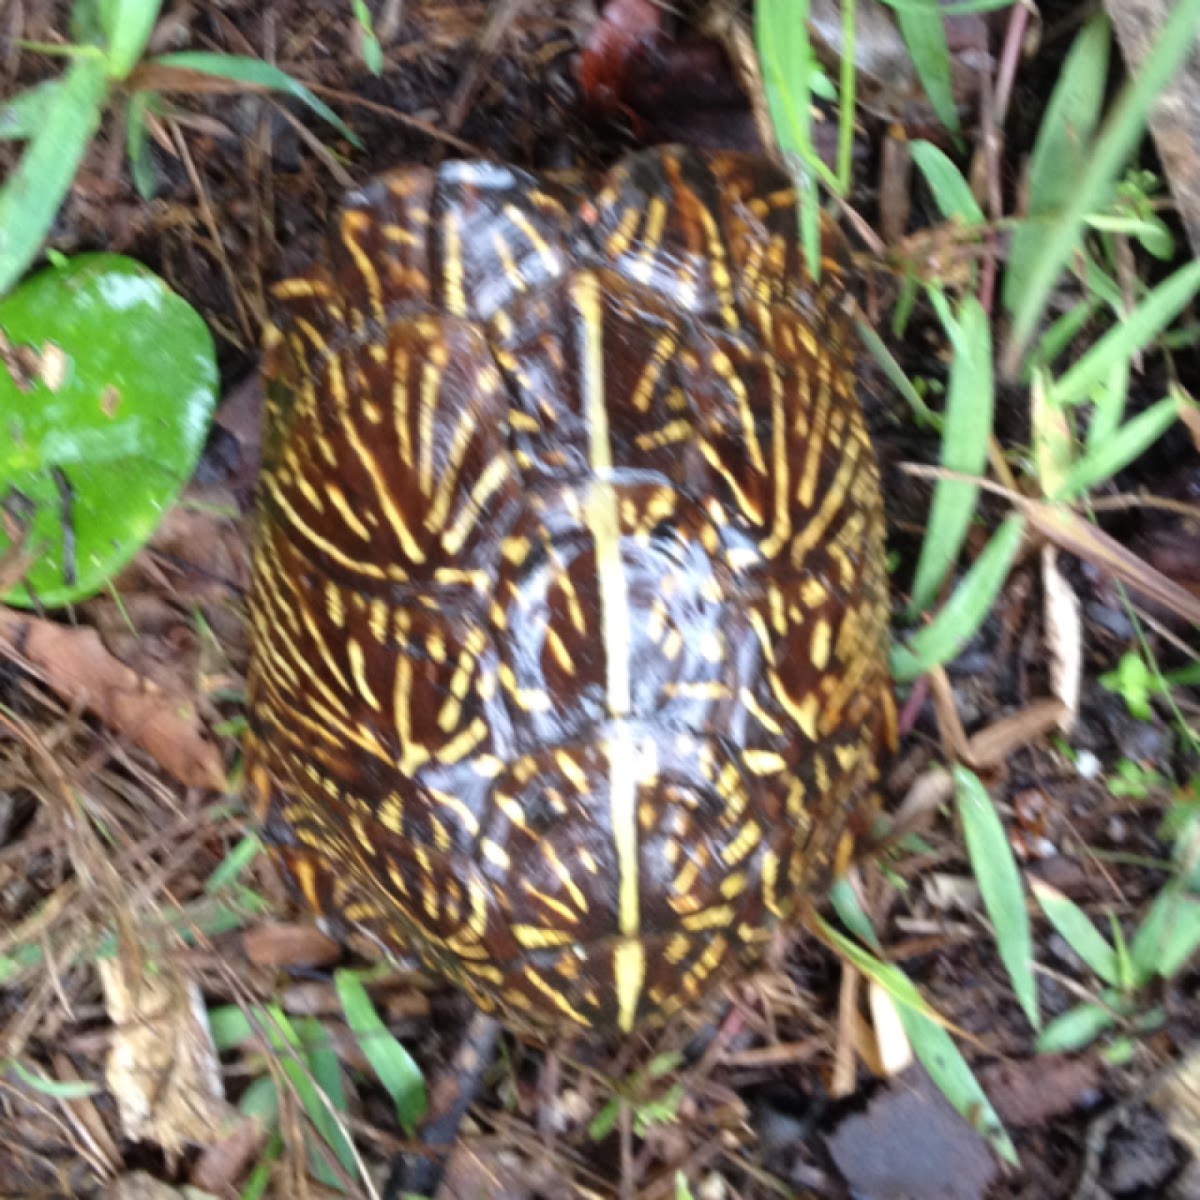 Florida box turtle (Terrapene carolina bauri